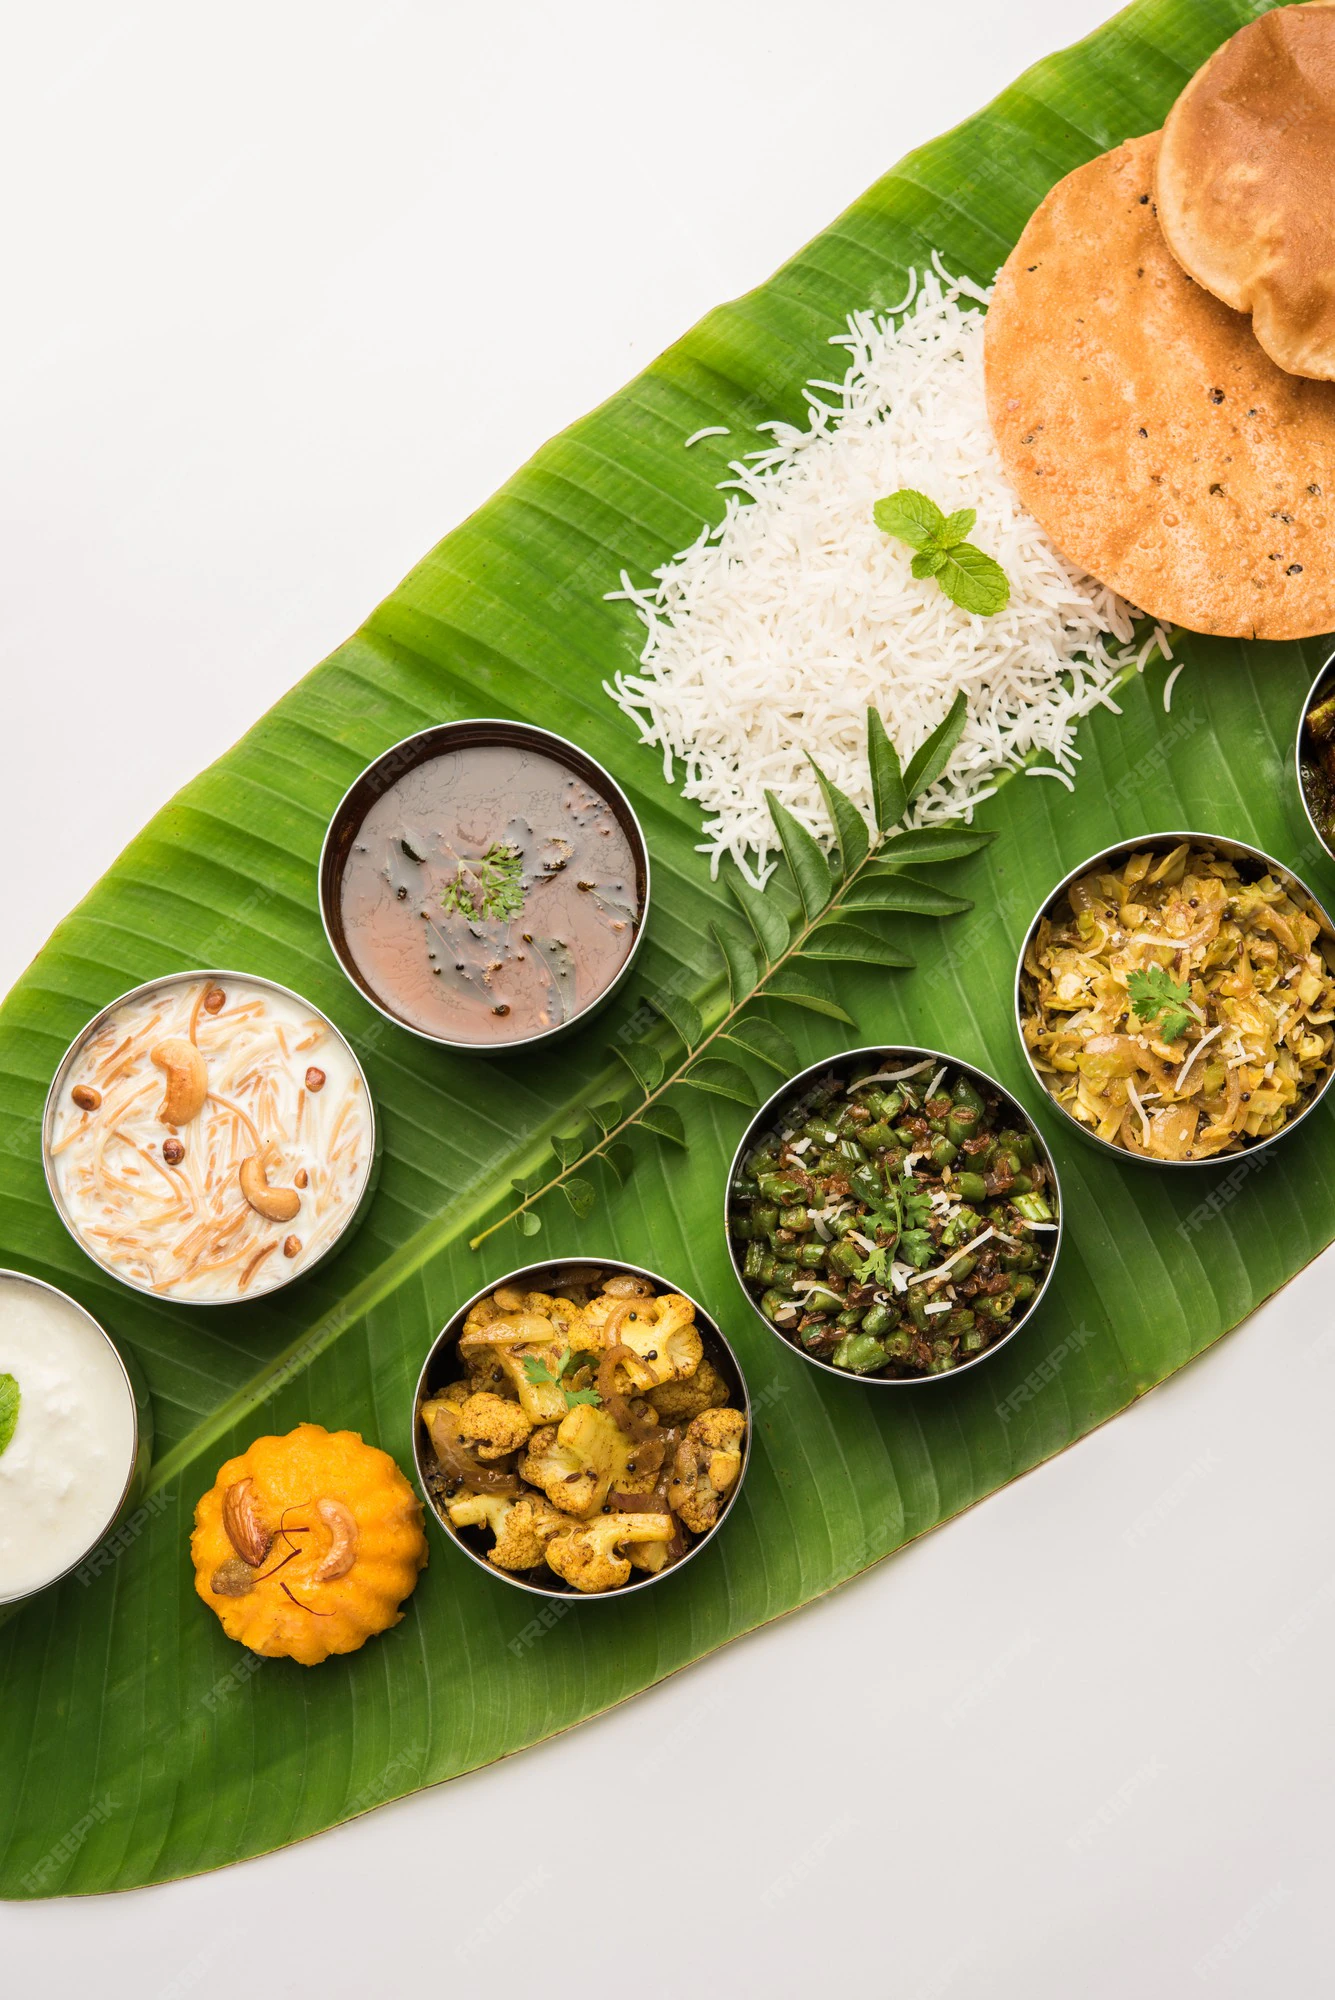 traditional-south-indian-meal-food-served-big-banana-leaf-food-platter-complete-thali-selective-focus_466689-50783 Nutritional Benefits of Banana Leaf: The Green Gold